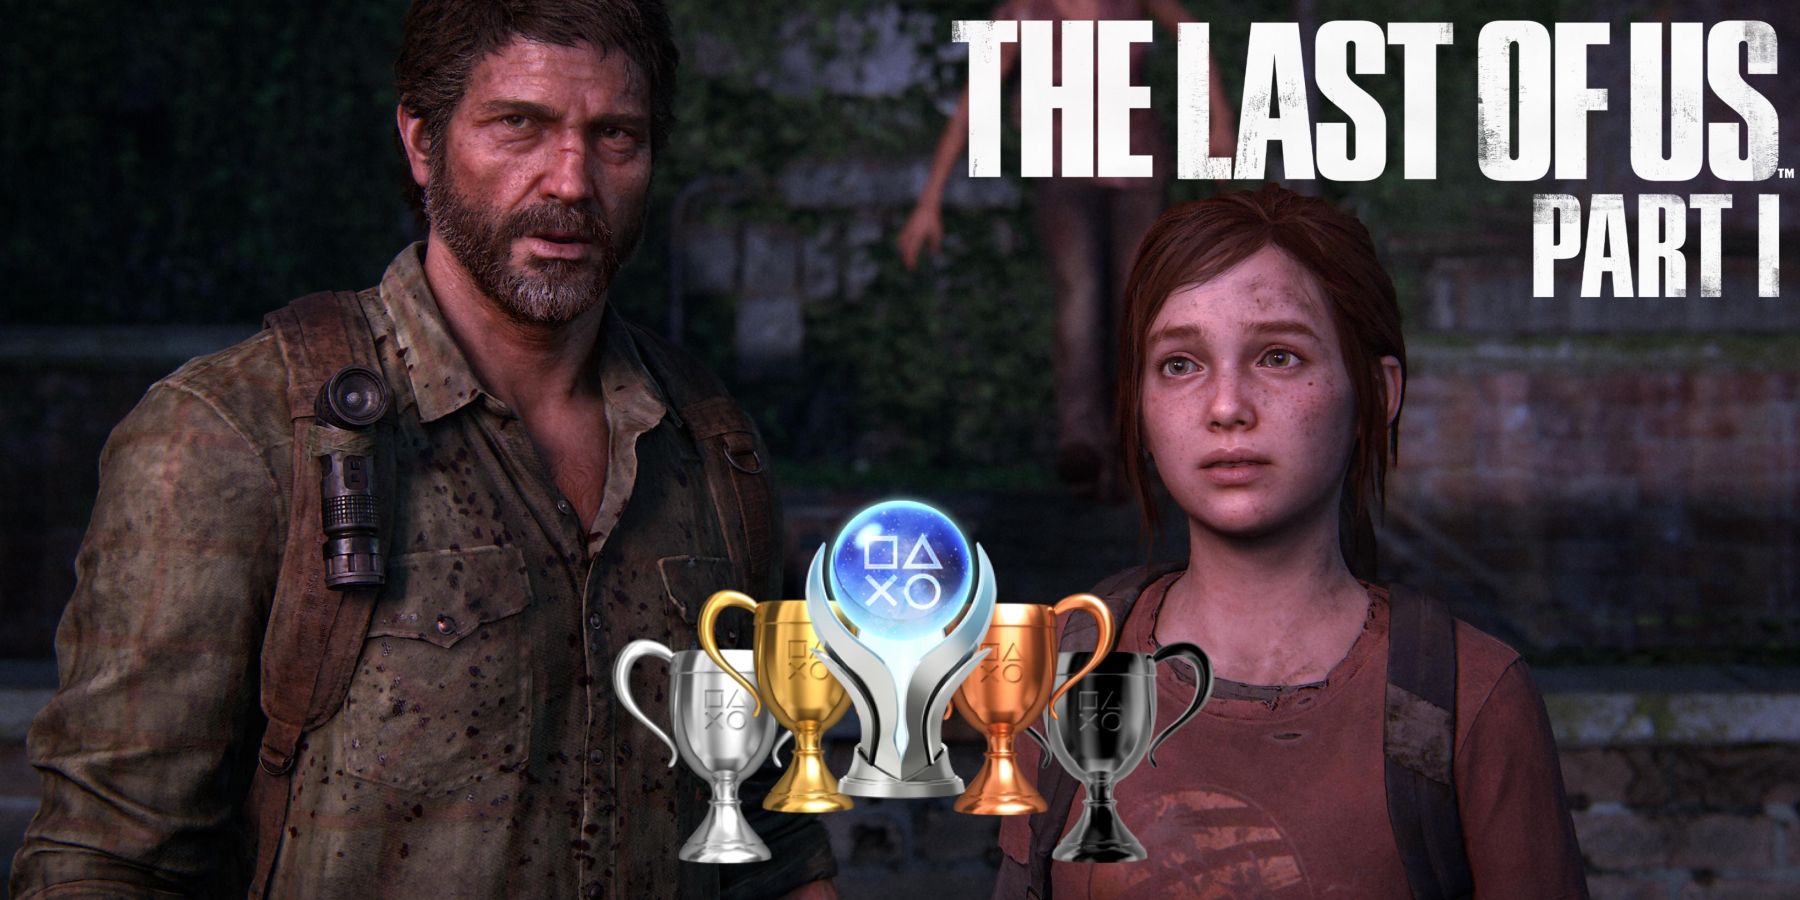 Trophy Guide - The Last of Us Part I - PSX Brasil